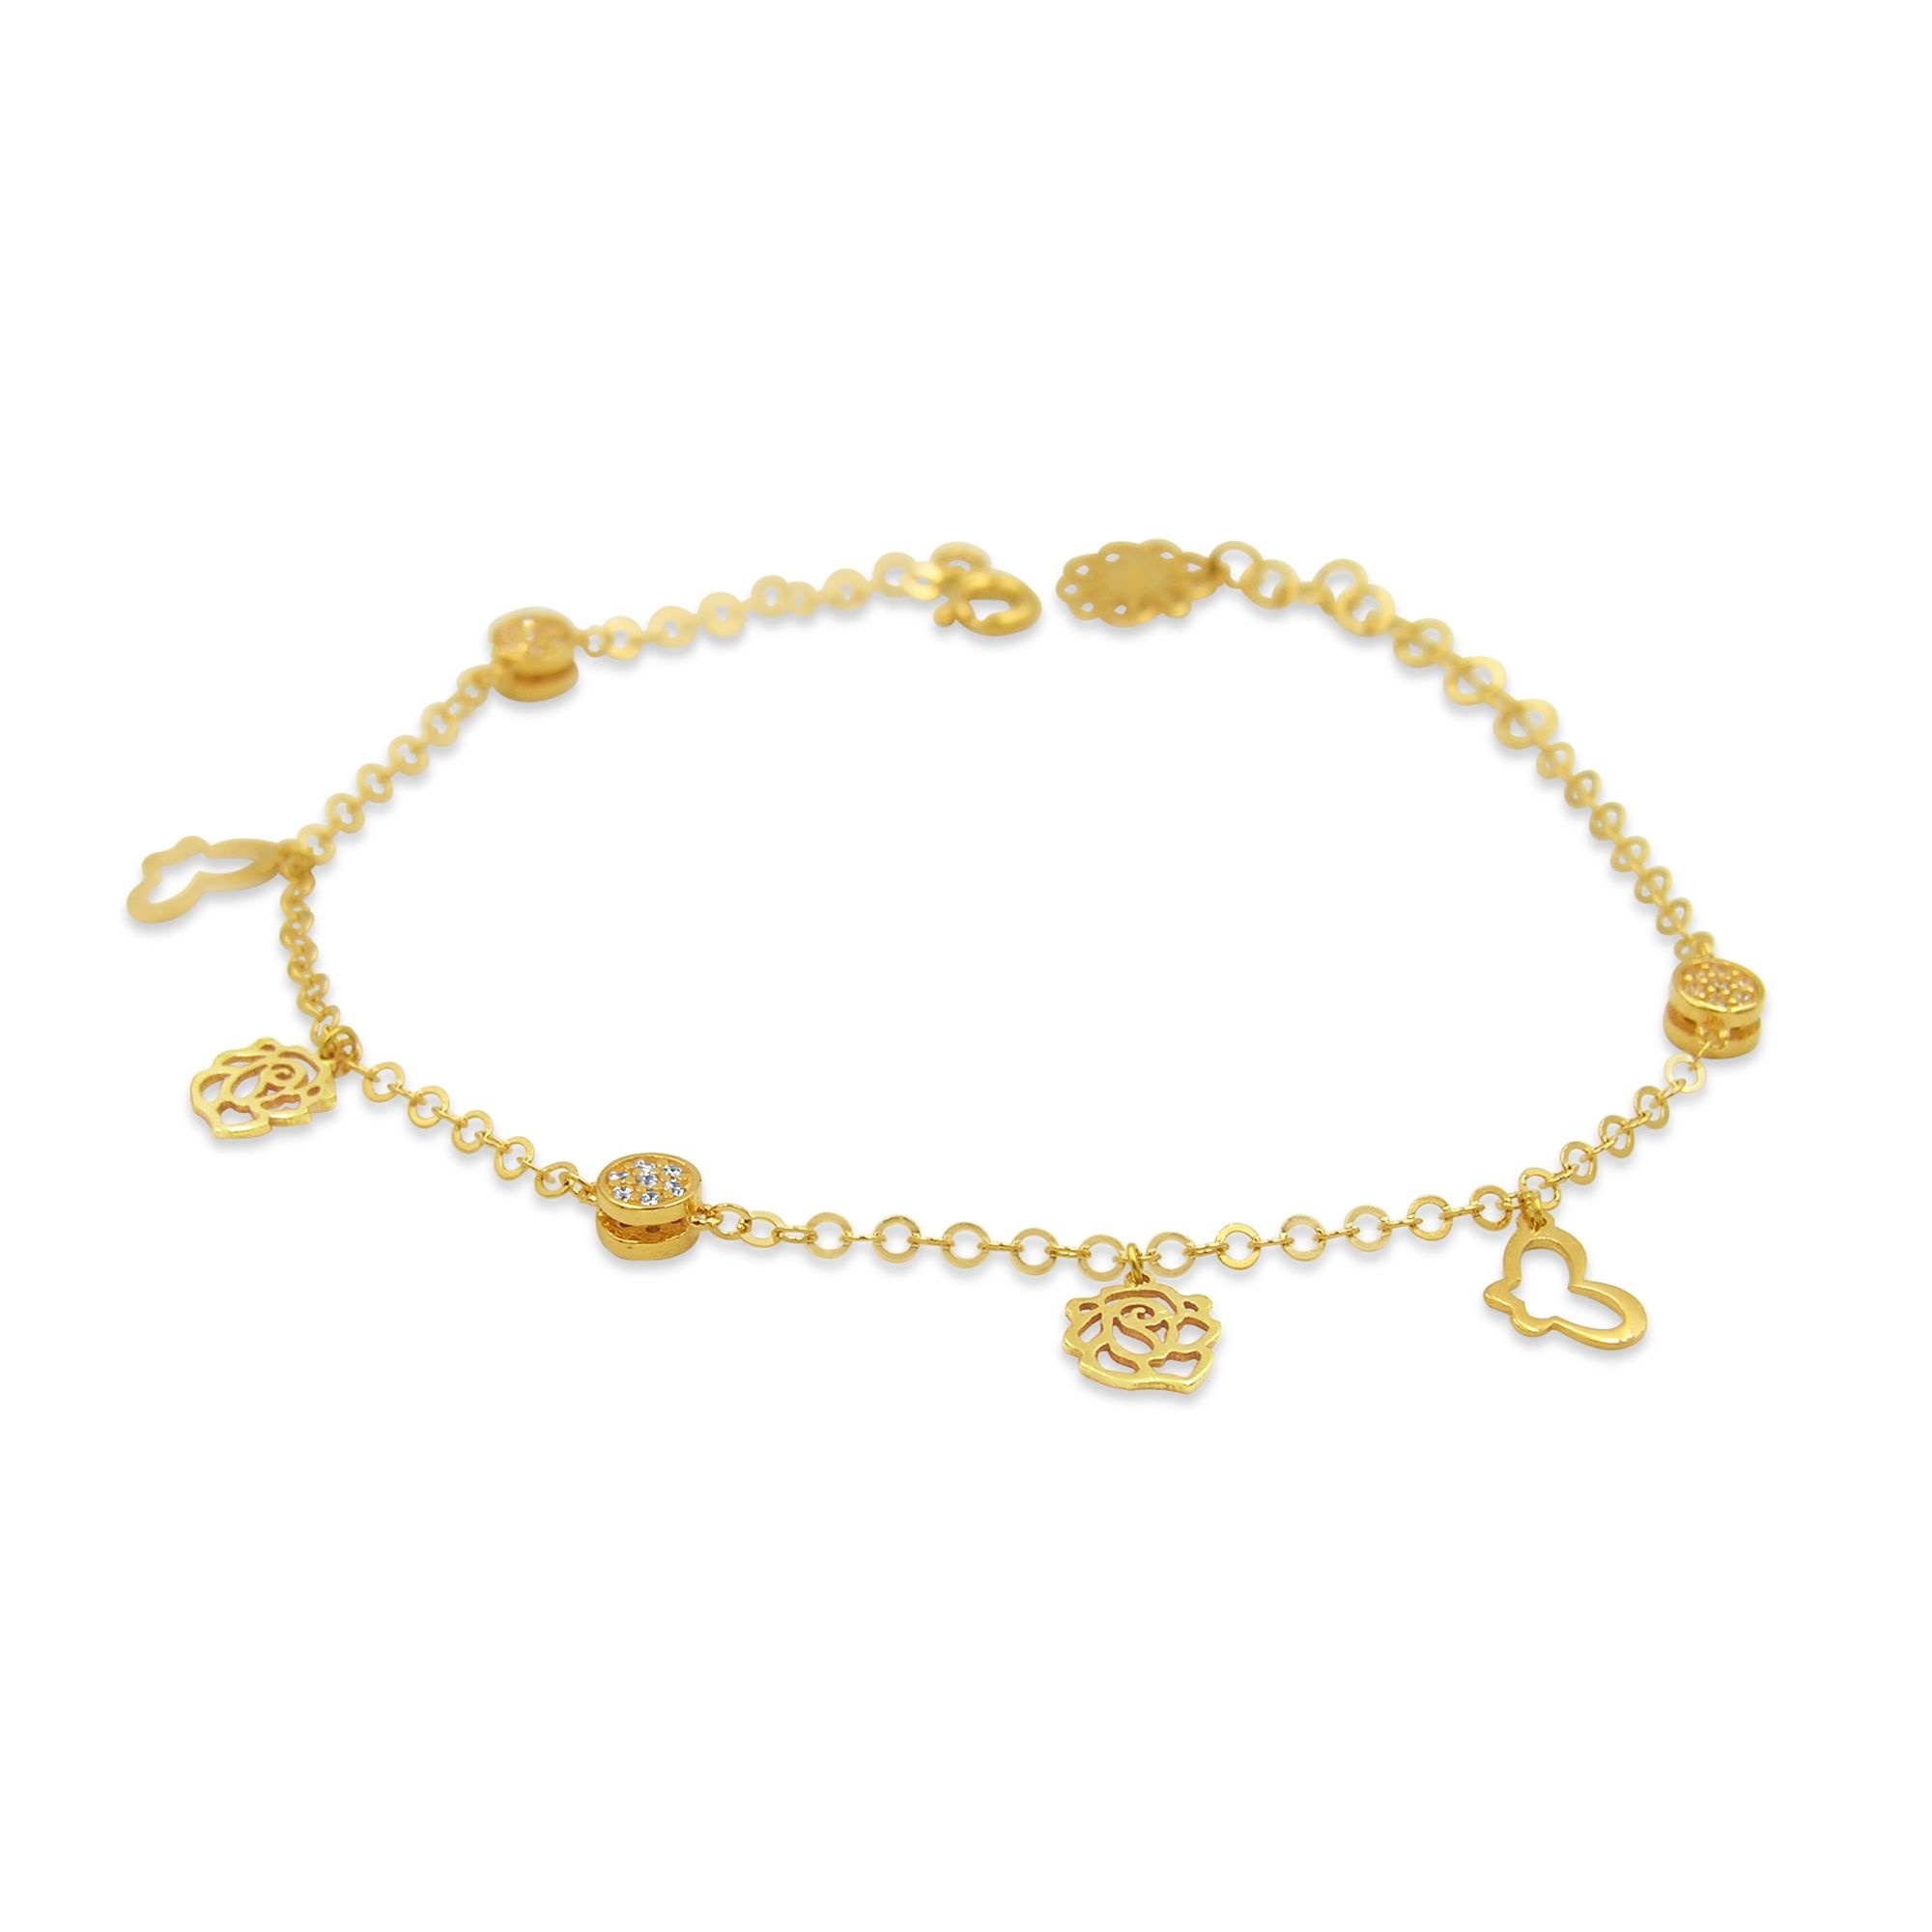 DI Gold Tone Charm Bracelet W/3 Charms Boat Shell Fish Women's Jewelry |  eBay